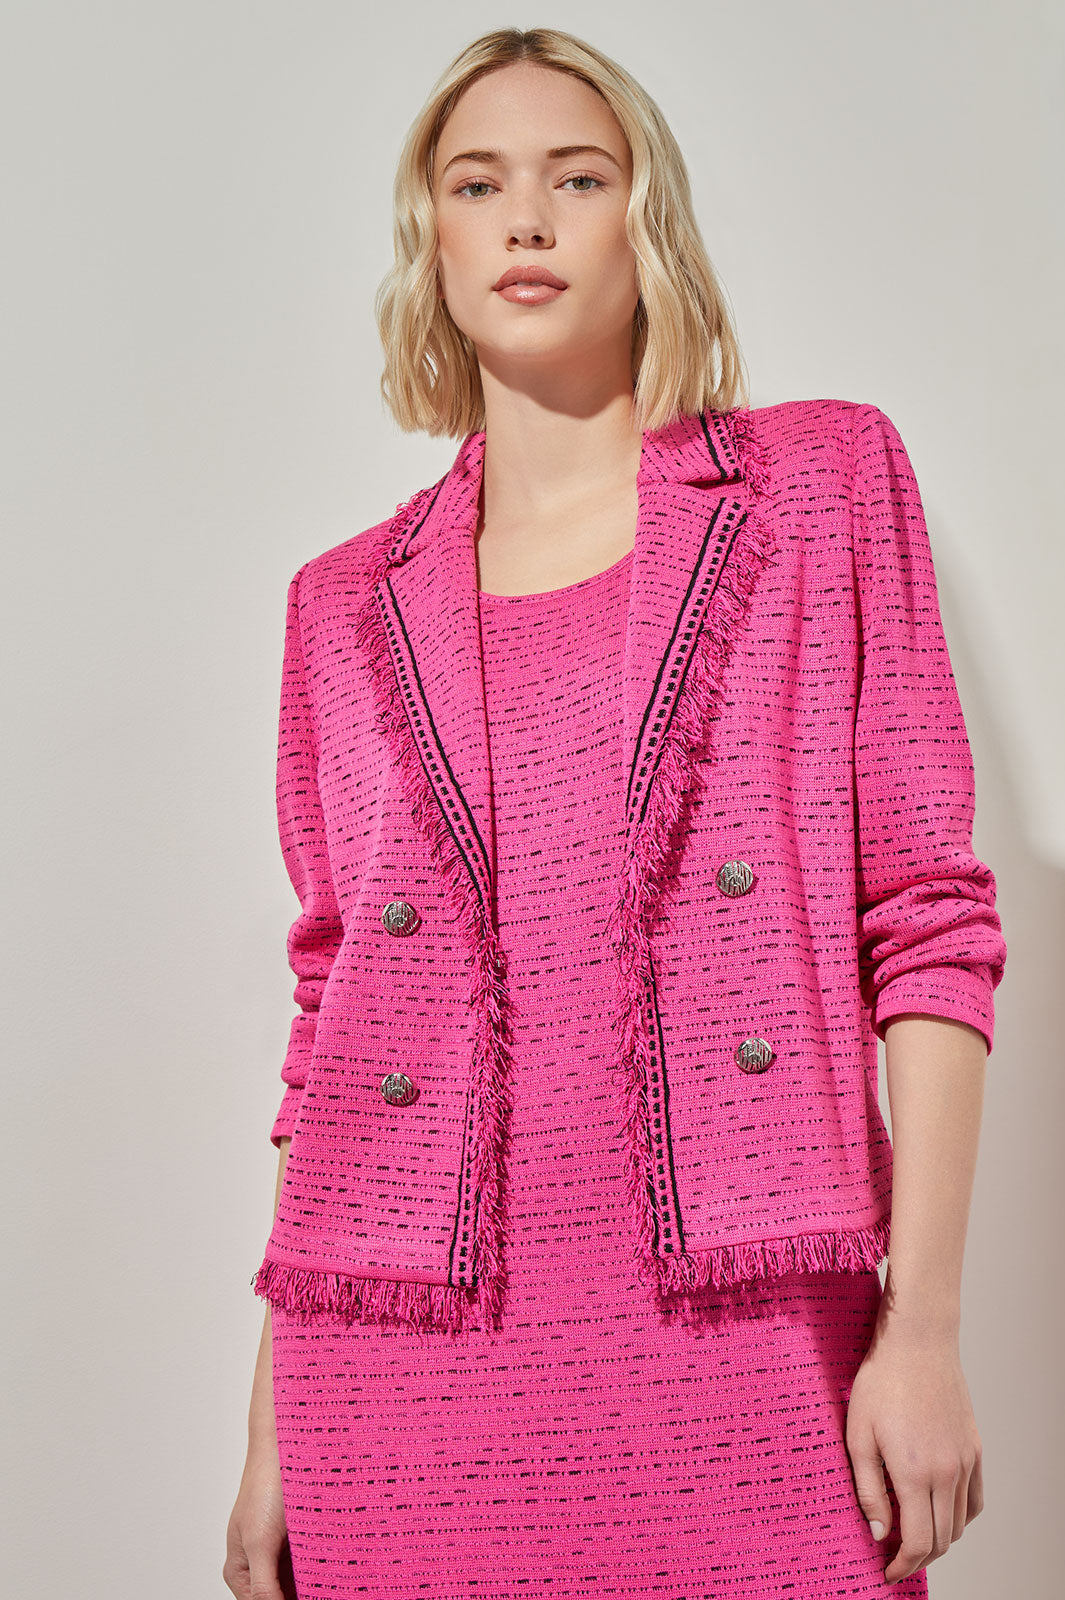 Women's Blazers - Knit Jackets & Cardigans | Ming Wang Knits